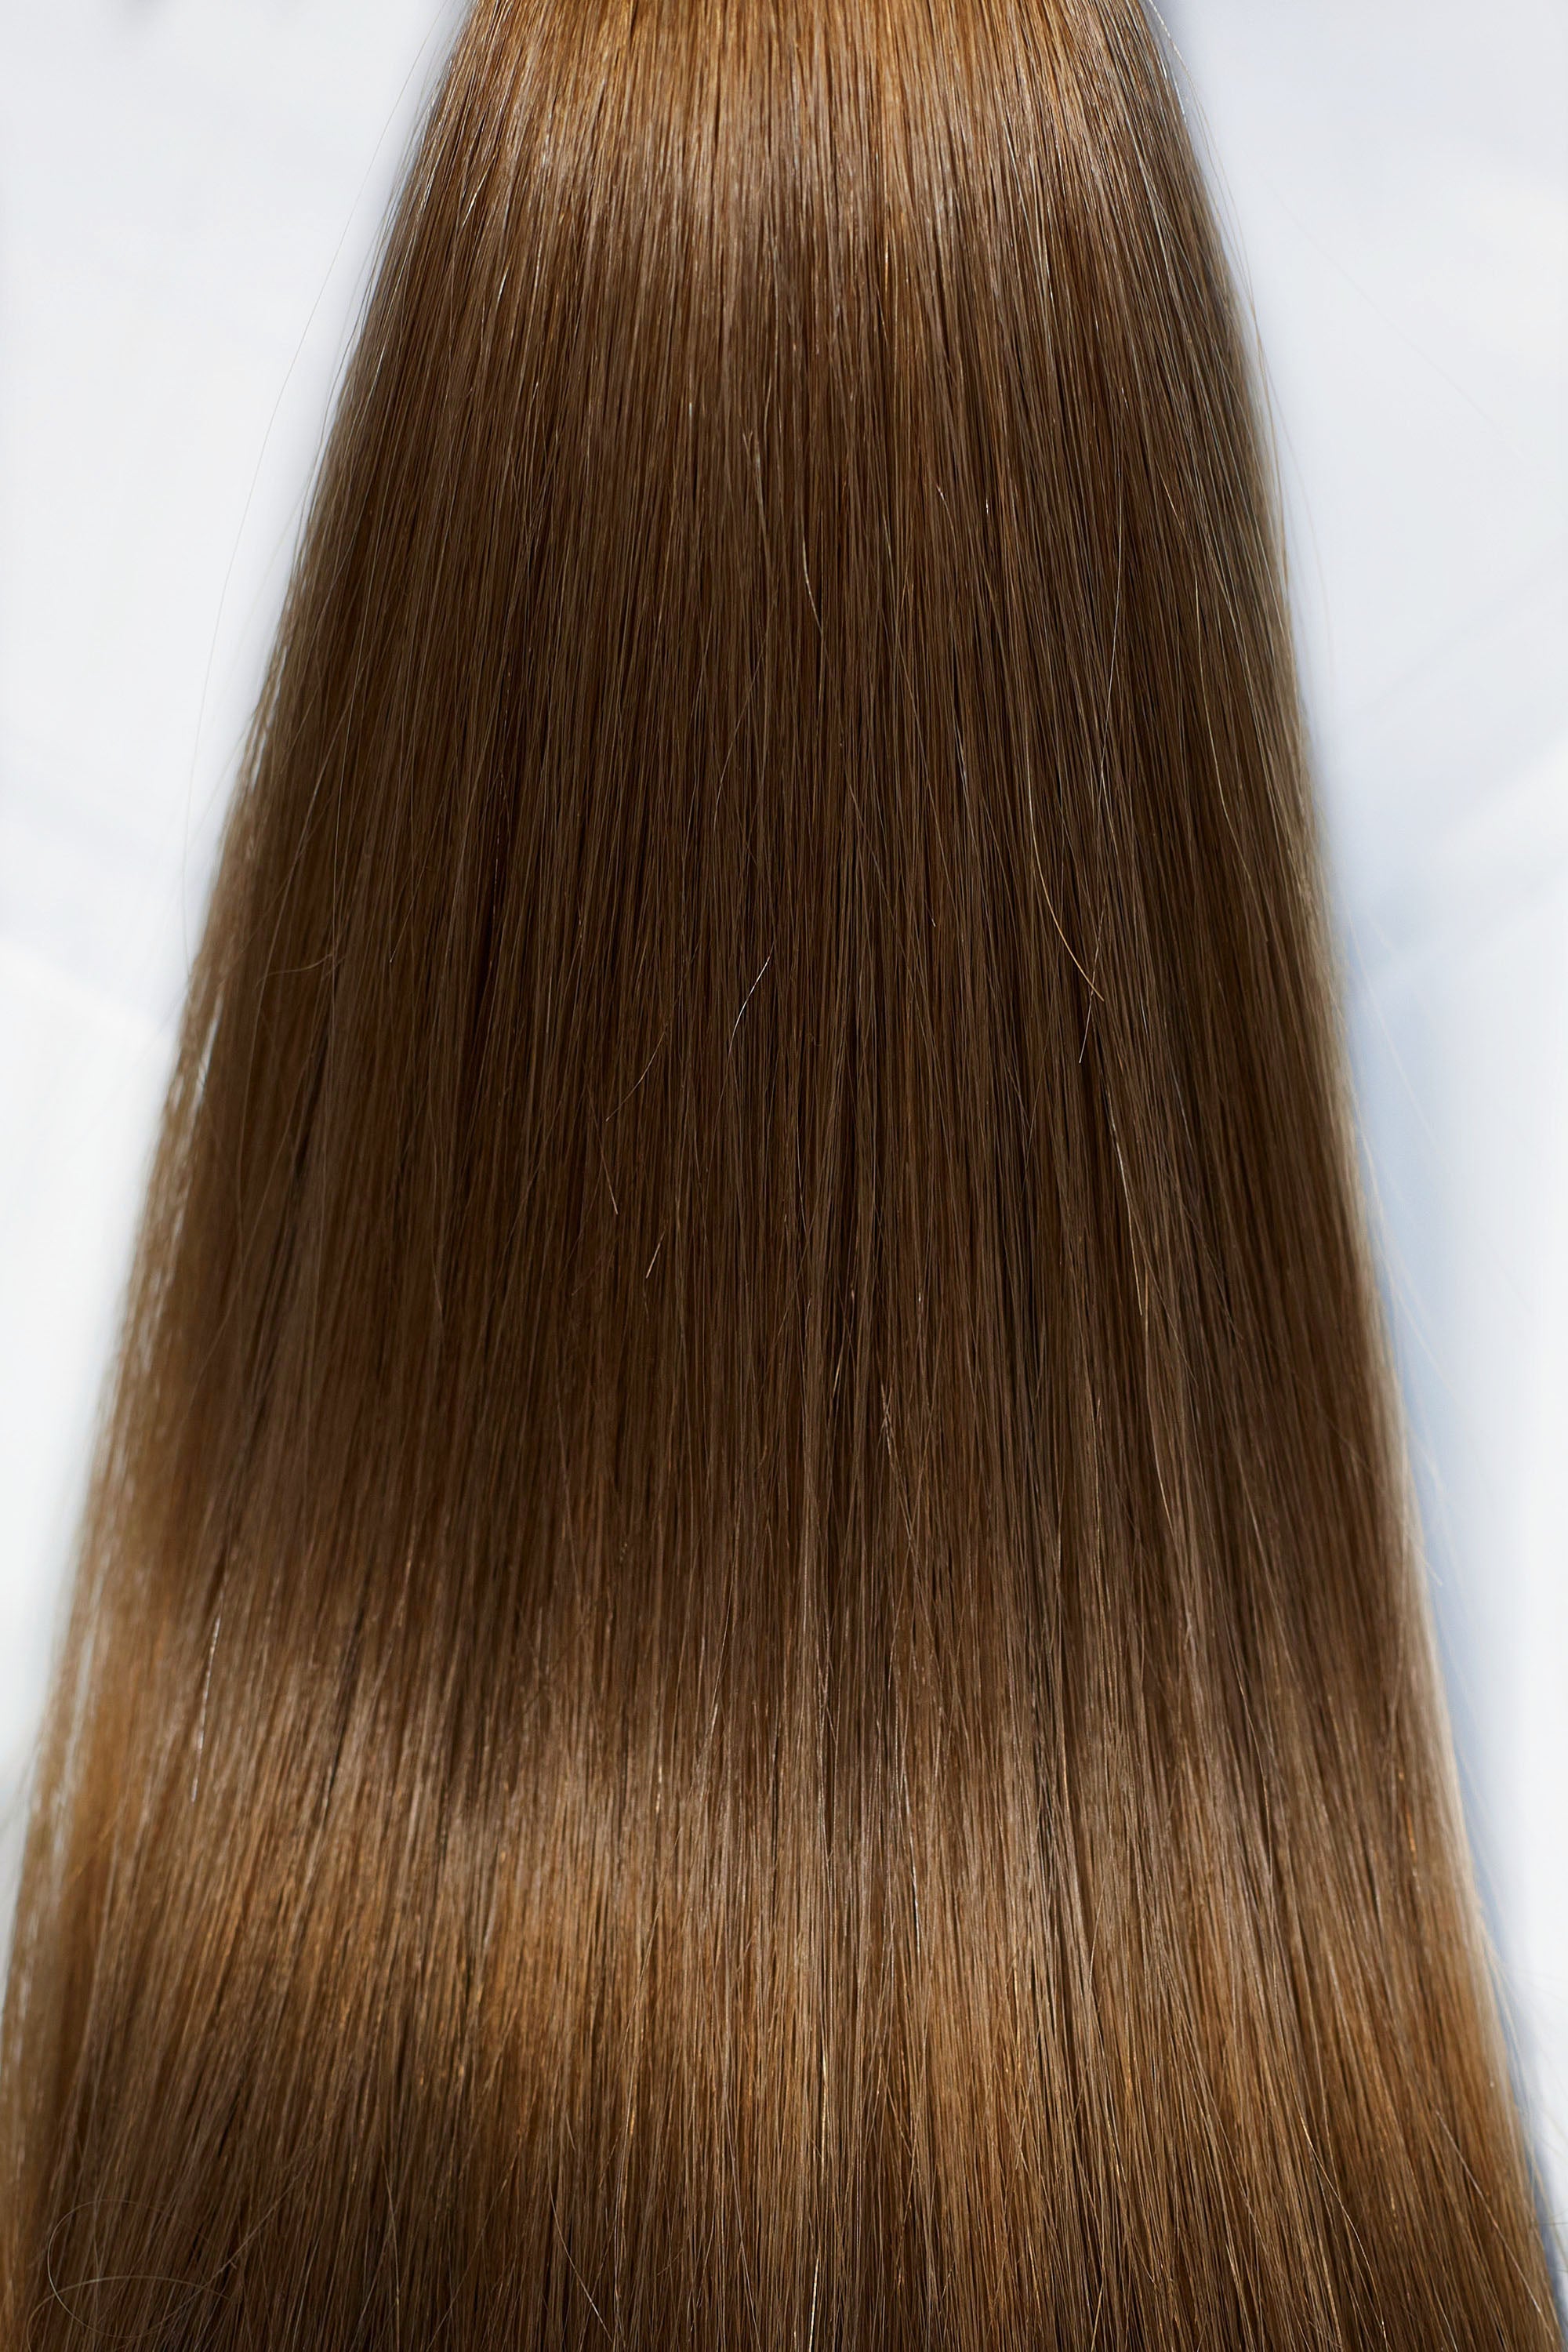 Behair professional Keratin Tip "Premium" 18" (45cm) Natural Straight Chestnut #6 - 25g (Standart - 0.7g each pcs) hair extensions